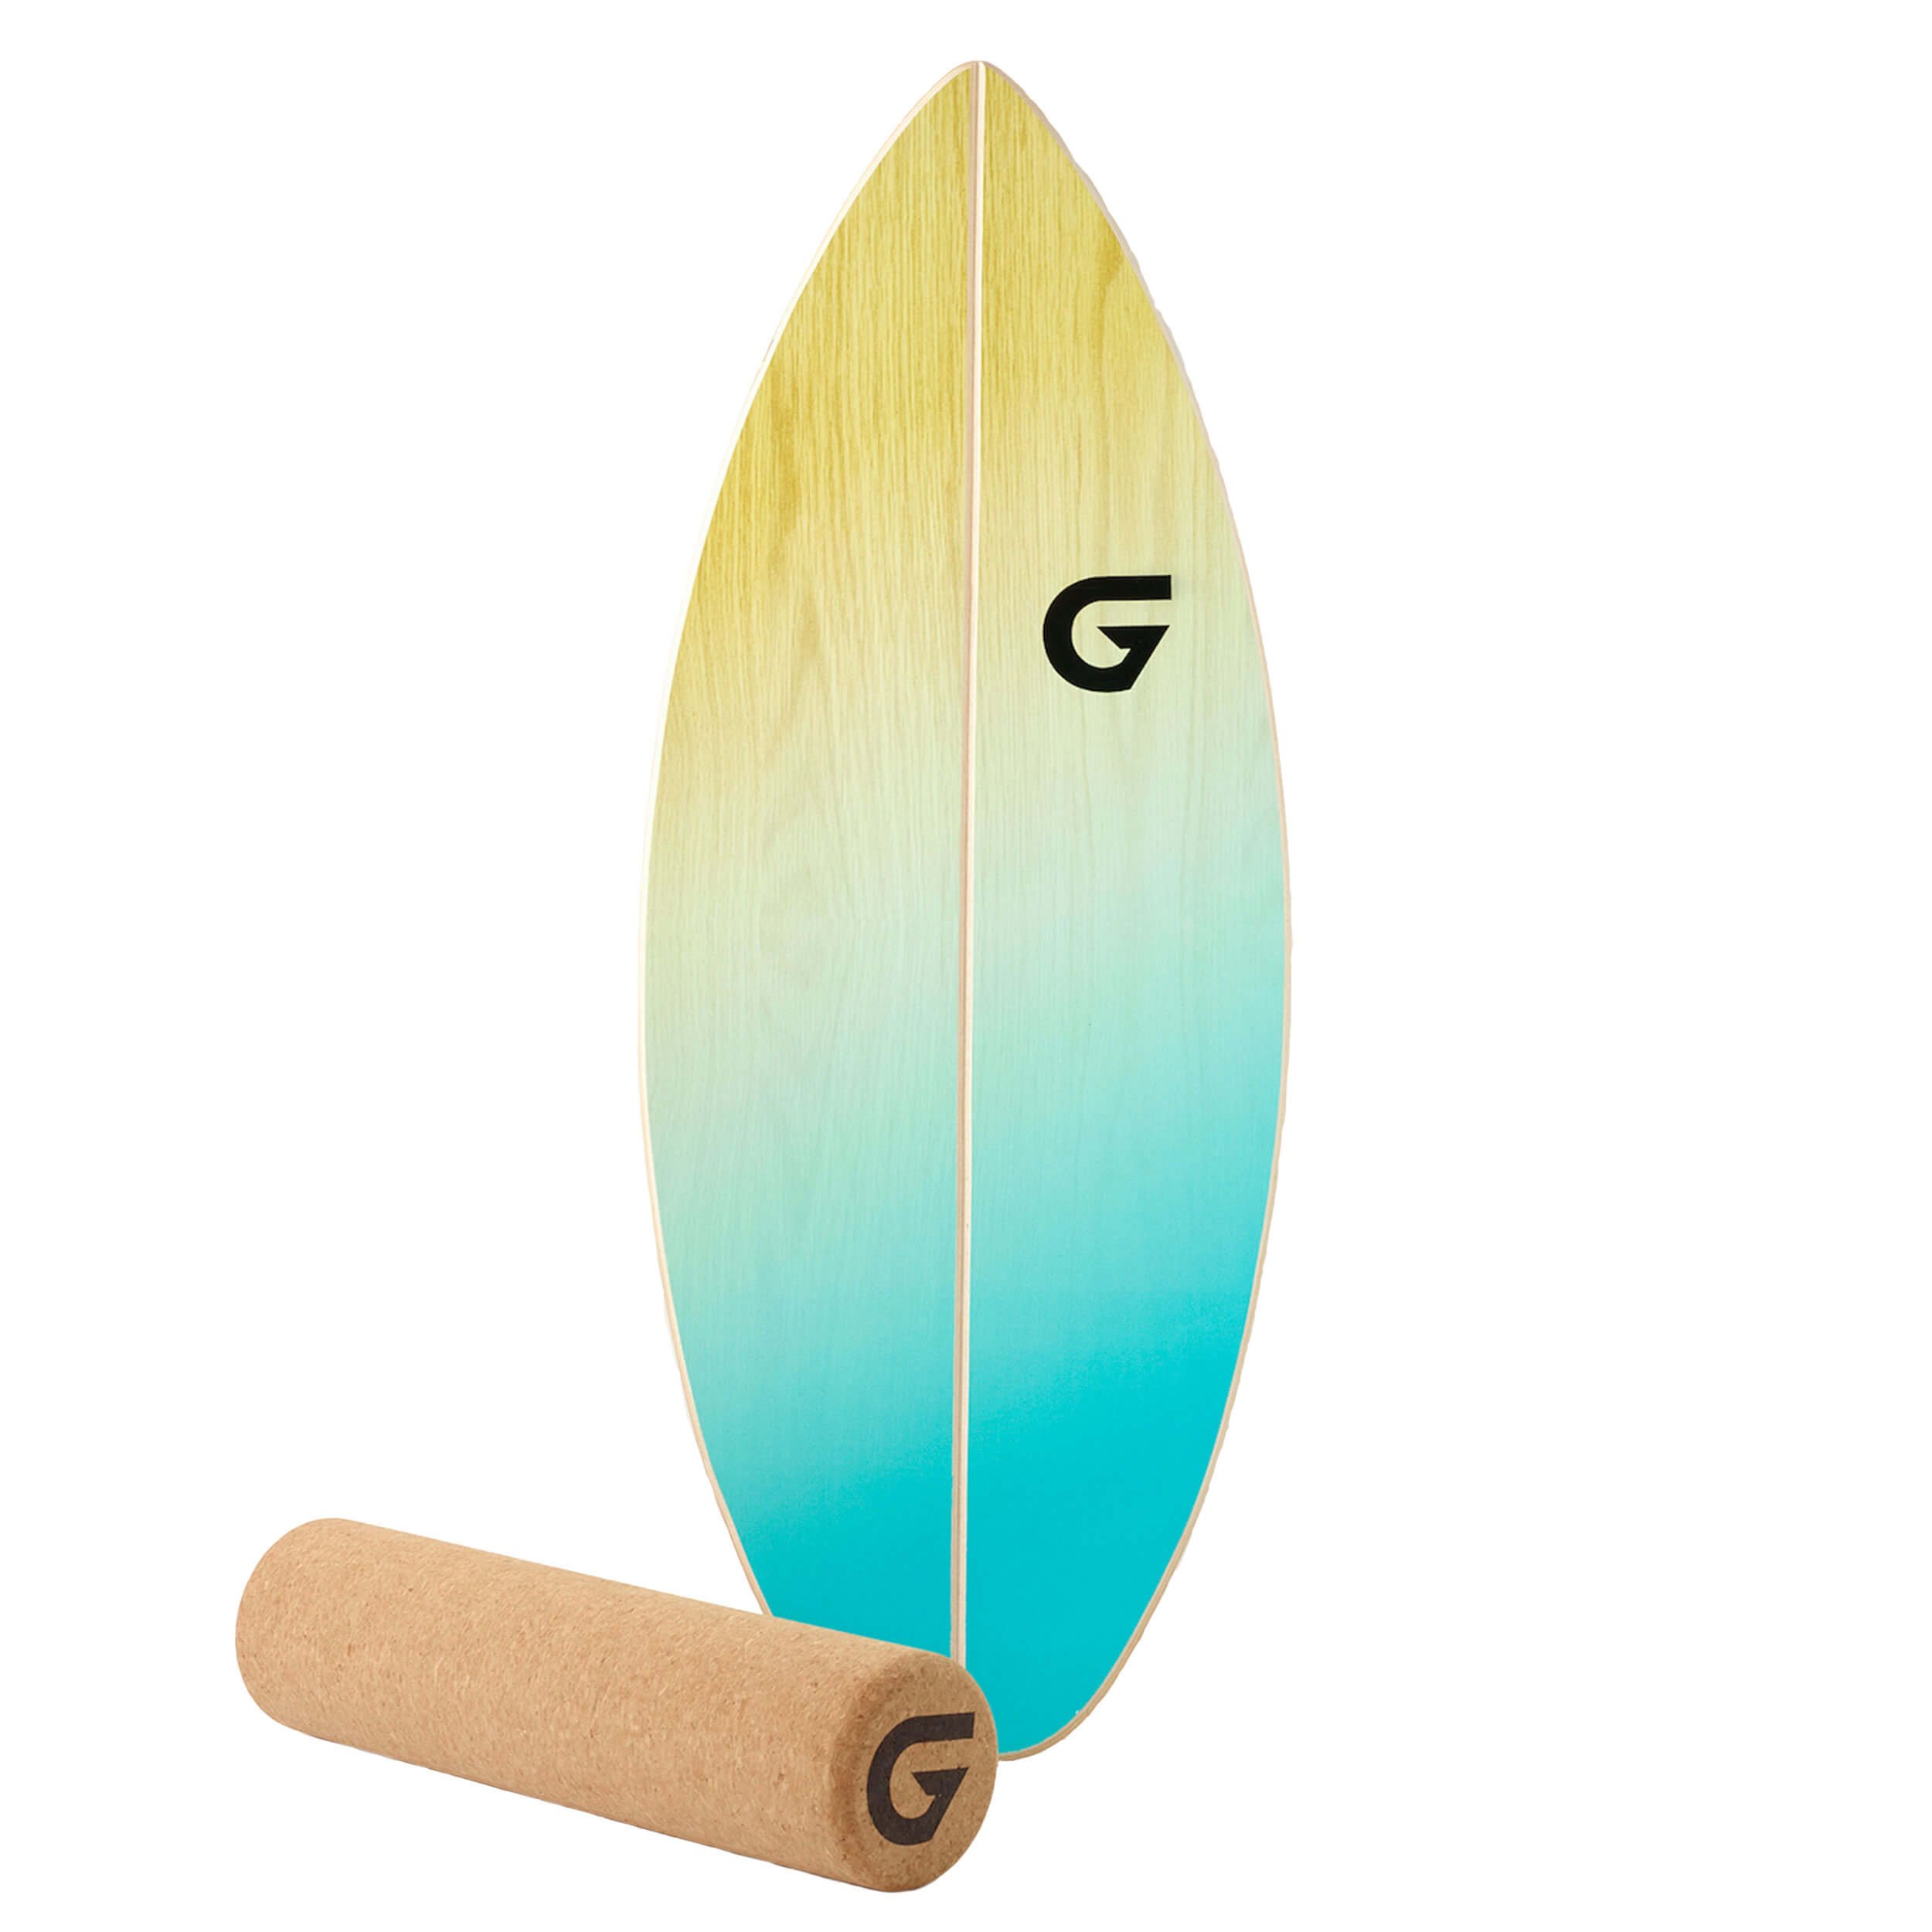 GB-Balnce-Board-mint.jpg